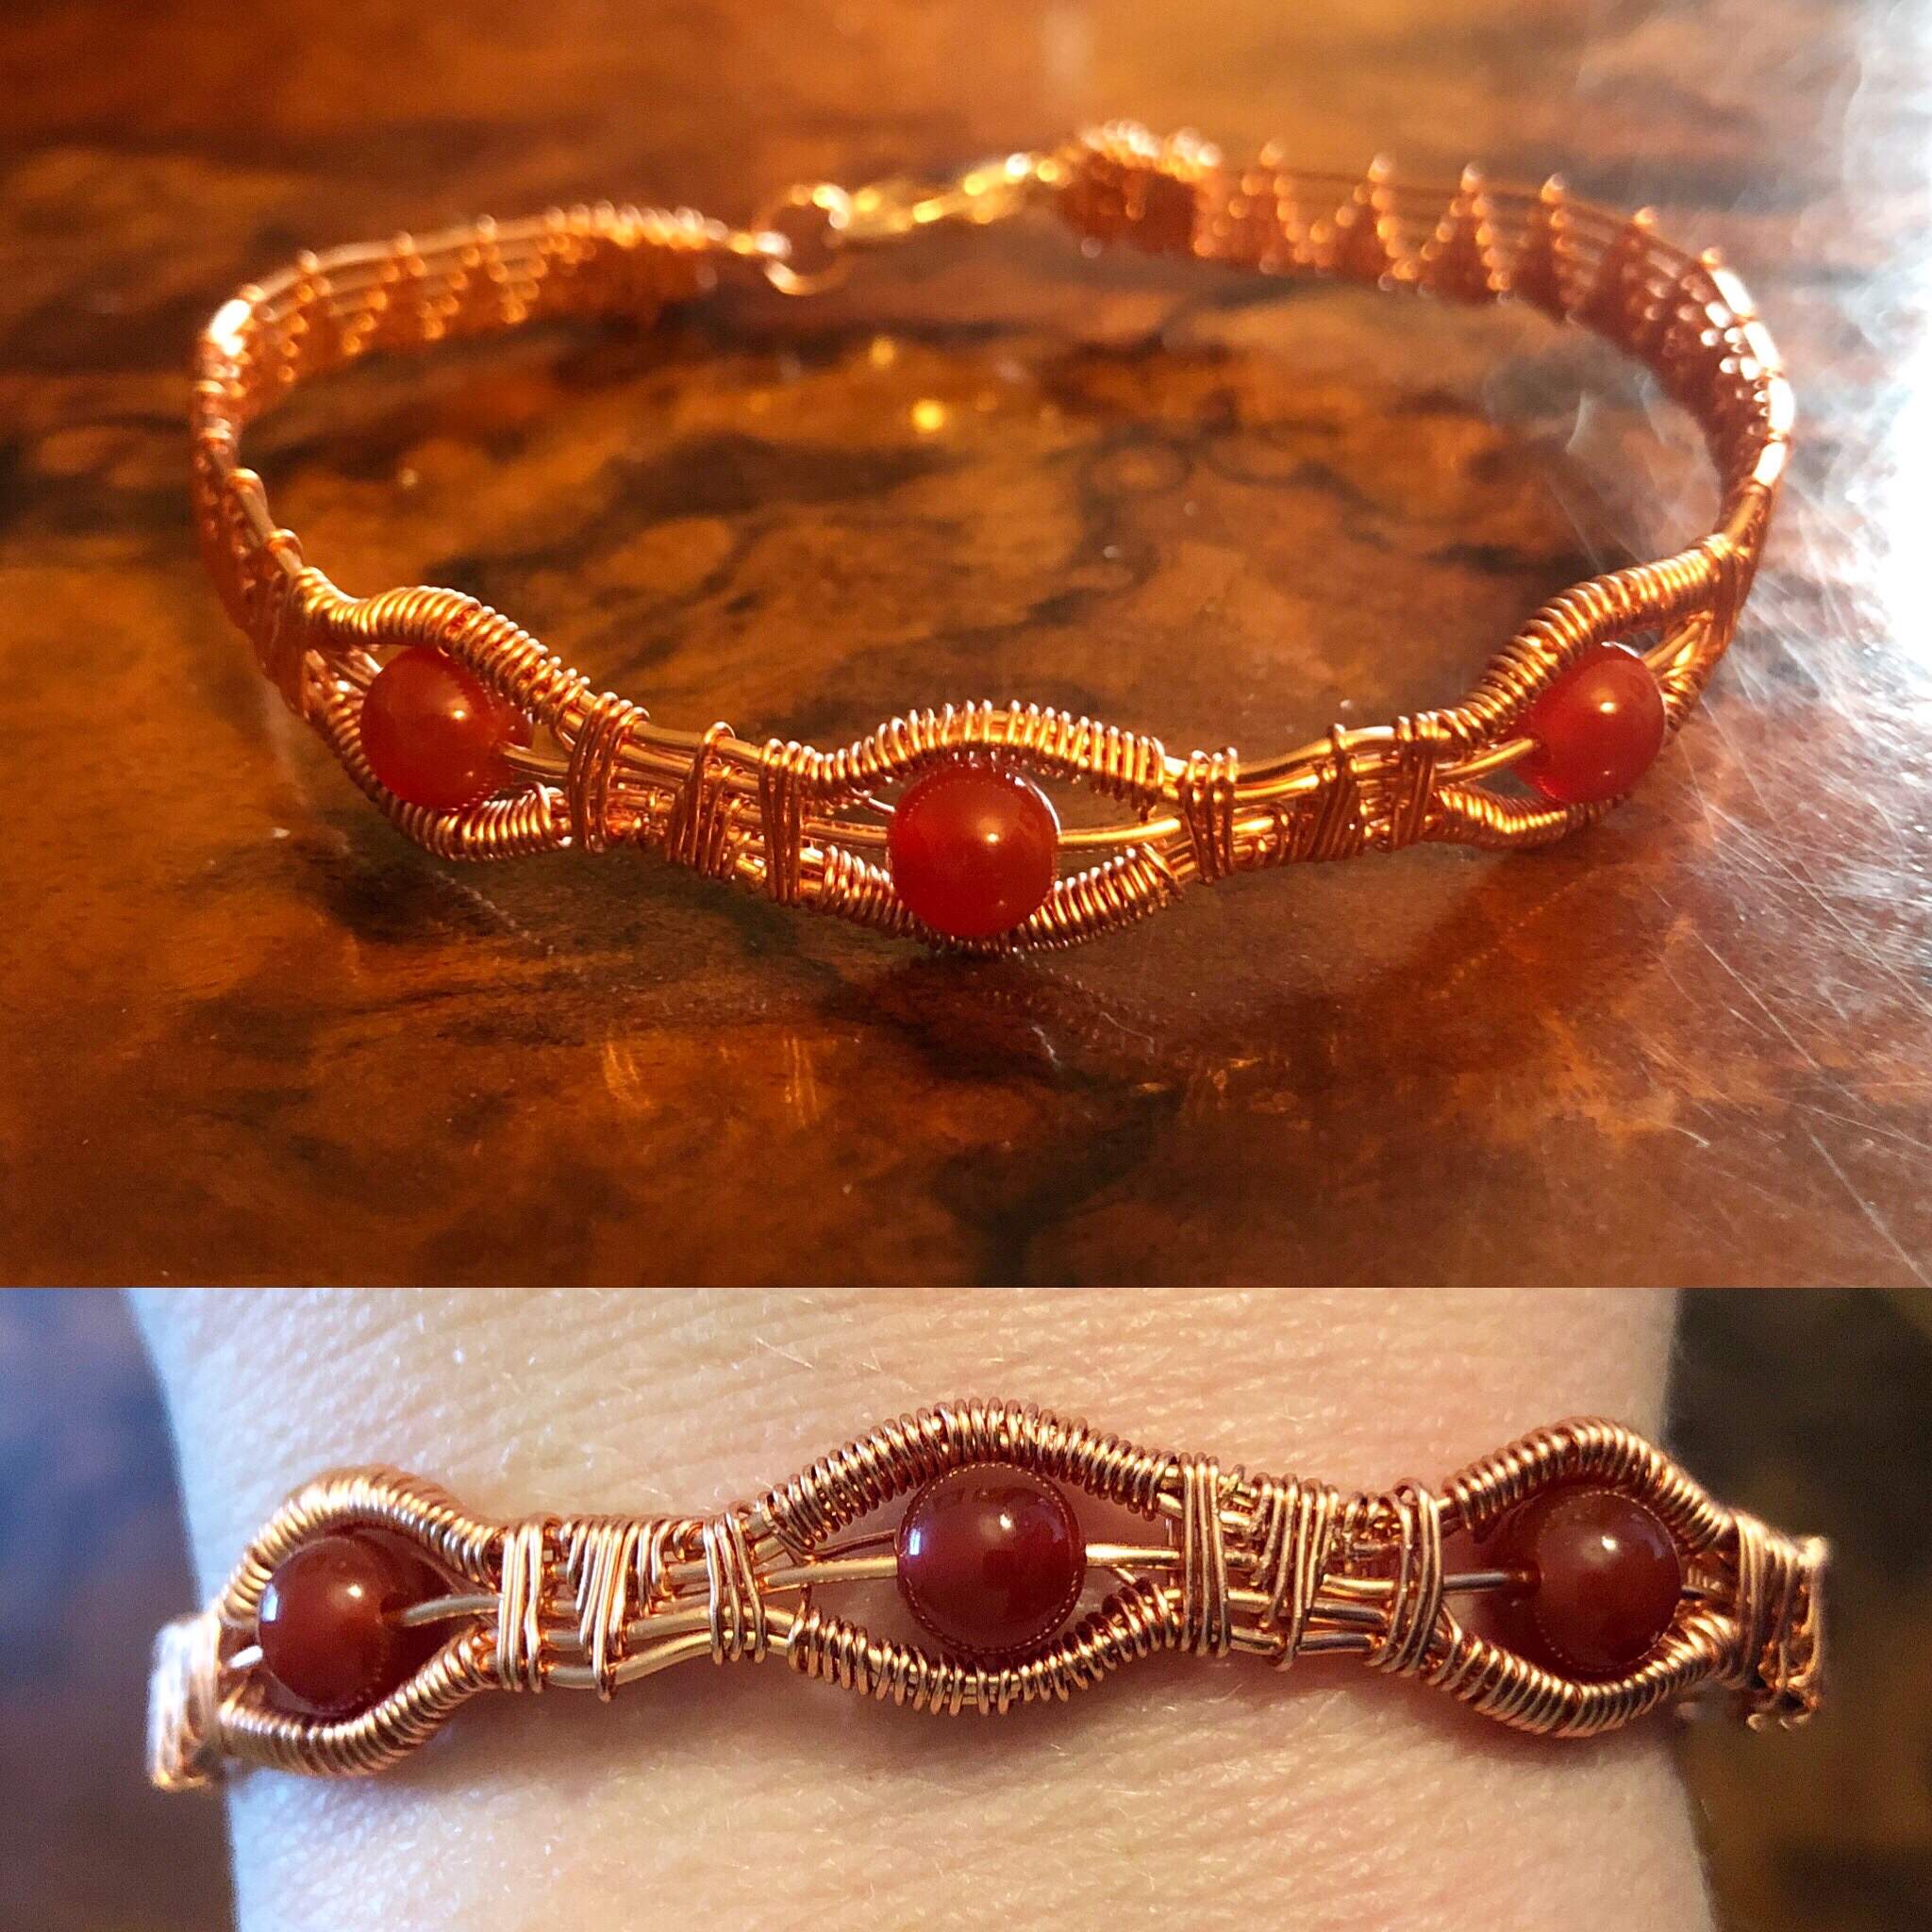 3 bead woven bracelet